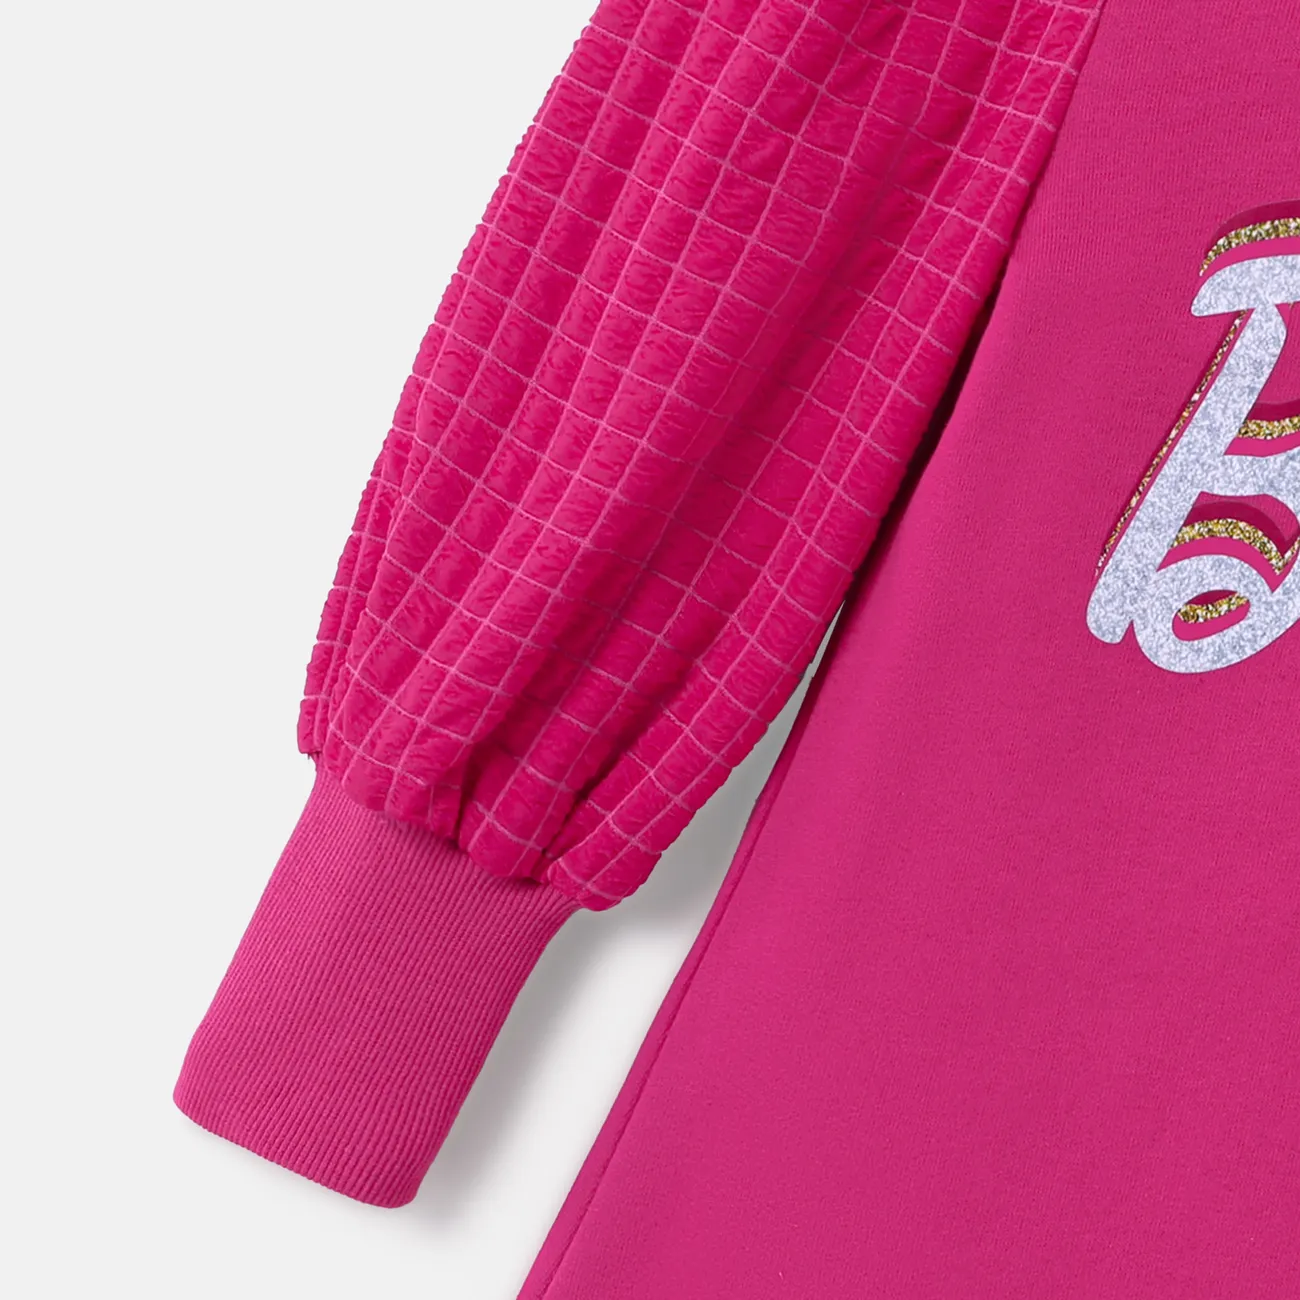 Barbie Kid Girl Letter Print Puff-sleeve Dress  Roseo big image 1